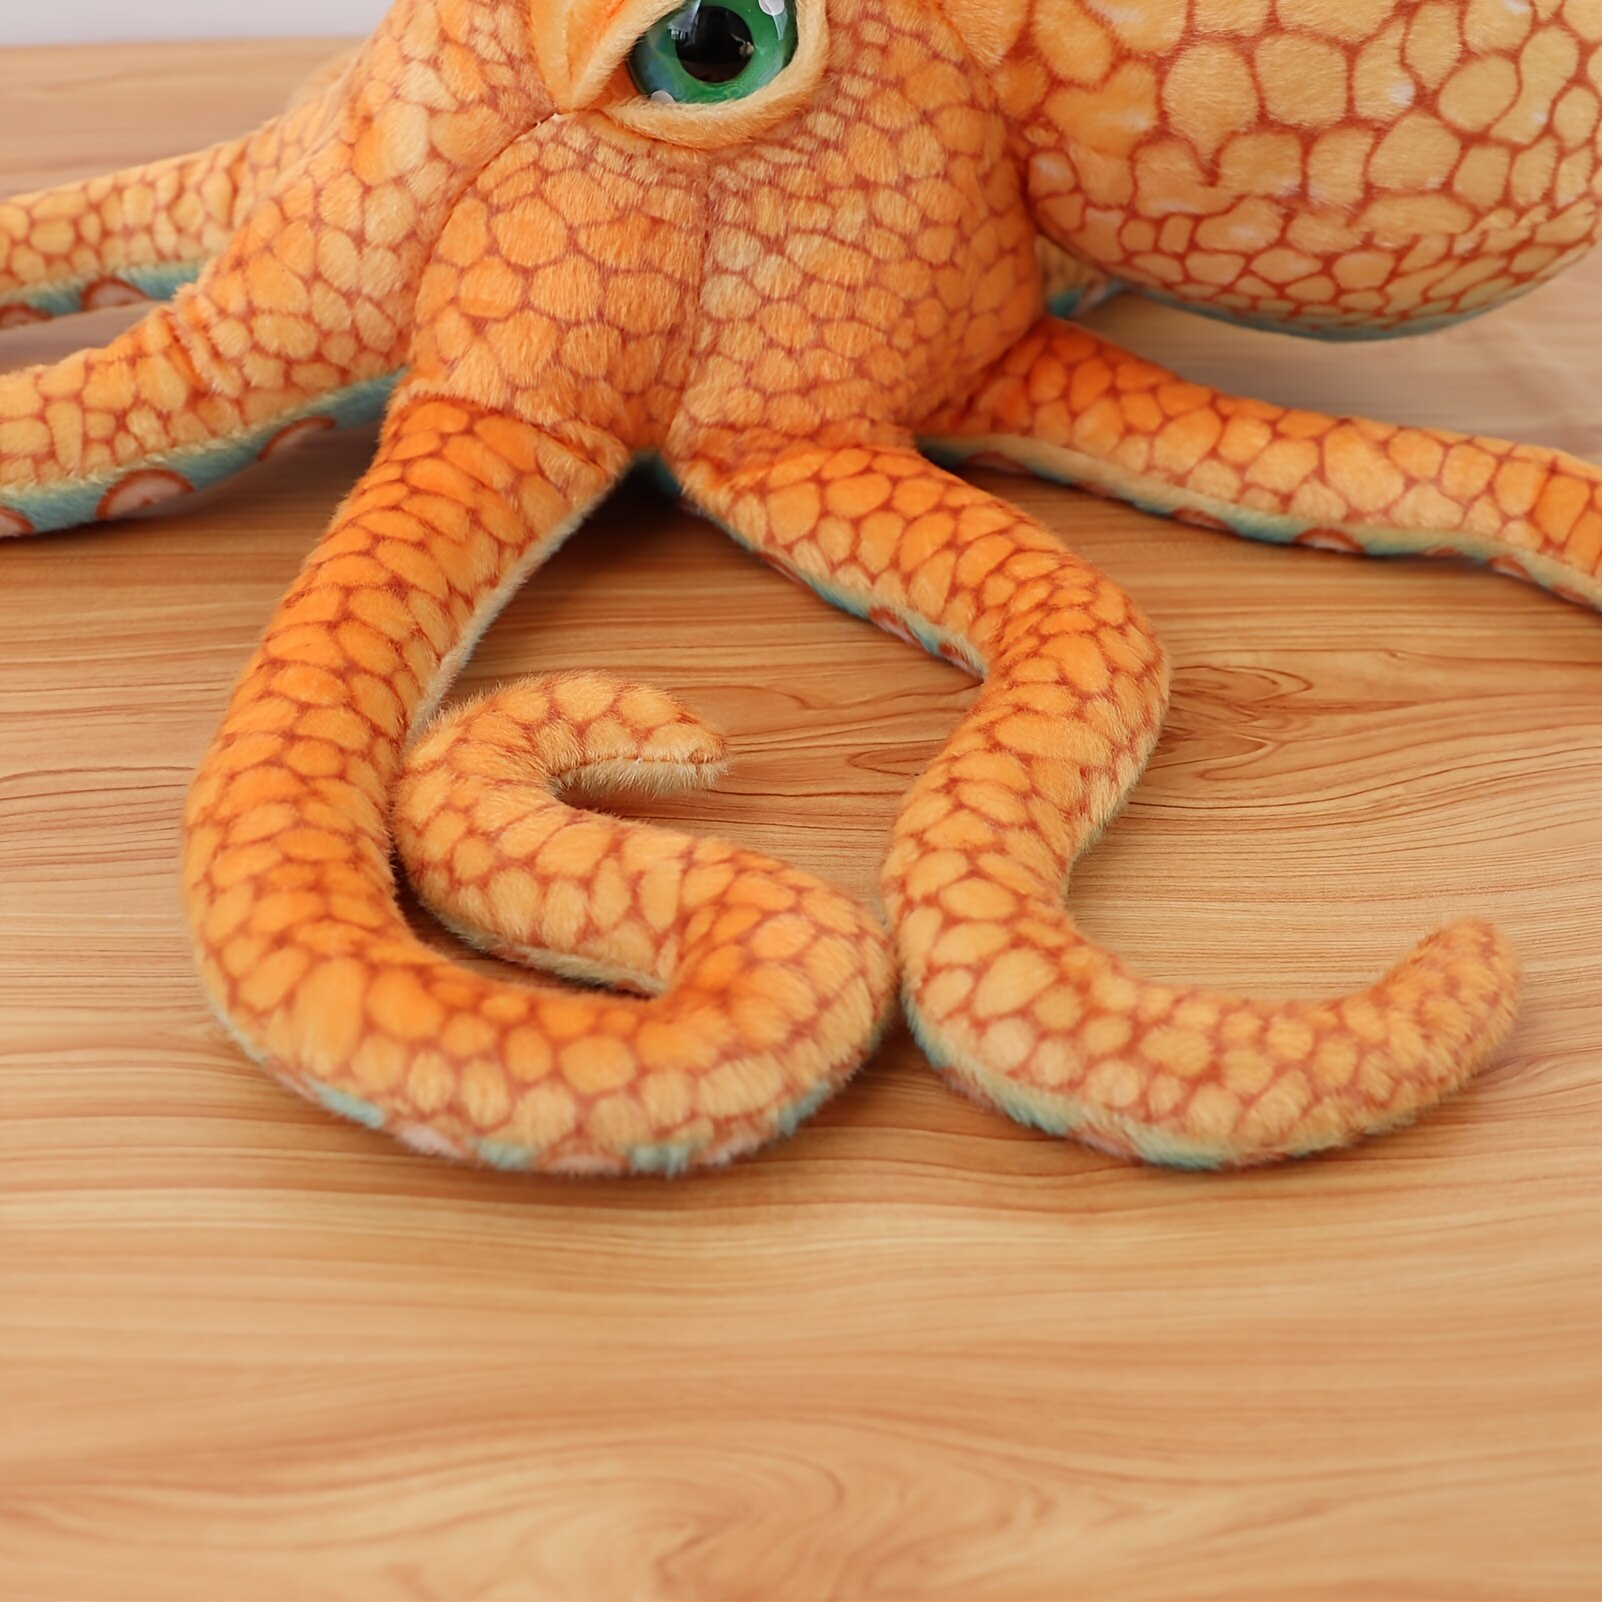 55 80cm Giant Simulated octopus Stuffed Toy High Quality lifelike Stuffed Sea Animal Doll Plush toys 3